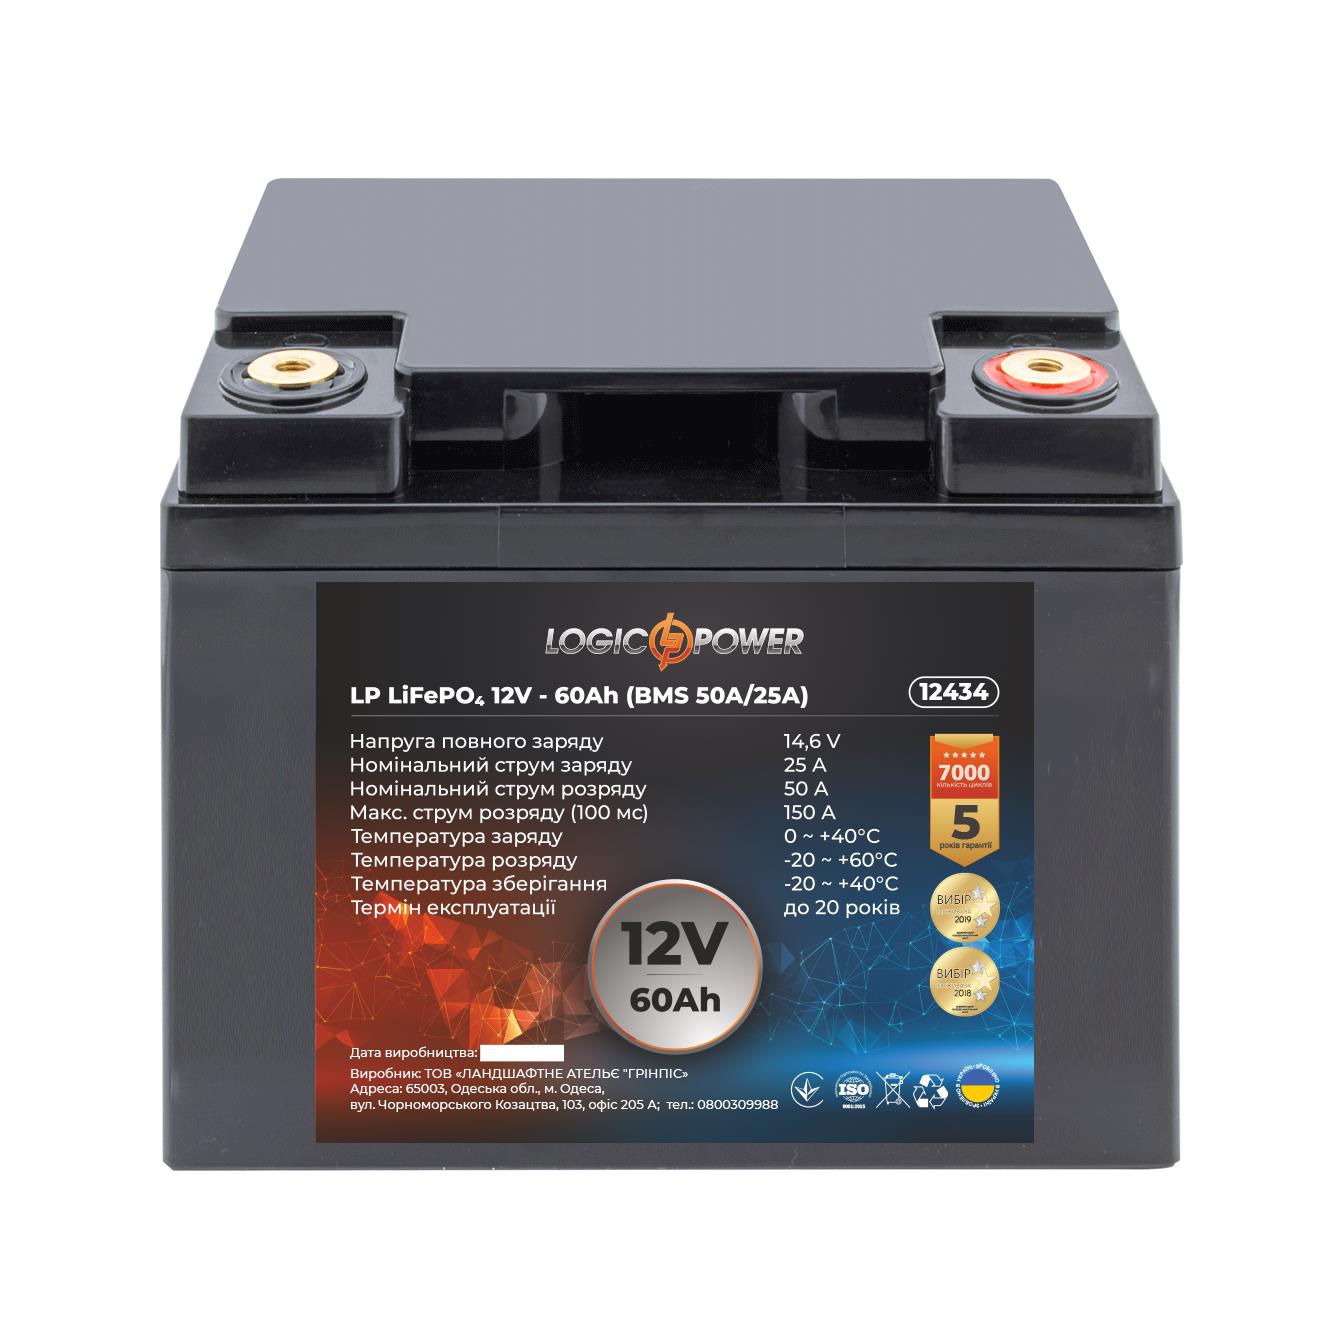 Аккумулятор литий-железо-фосфатный LogicPower LP LiFePO4 12V - 60 Ah (BMS 50A/25А) пластик (12434) в интернет-магазине, главное фото